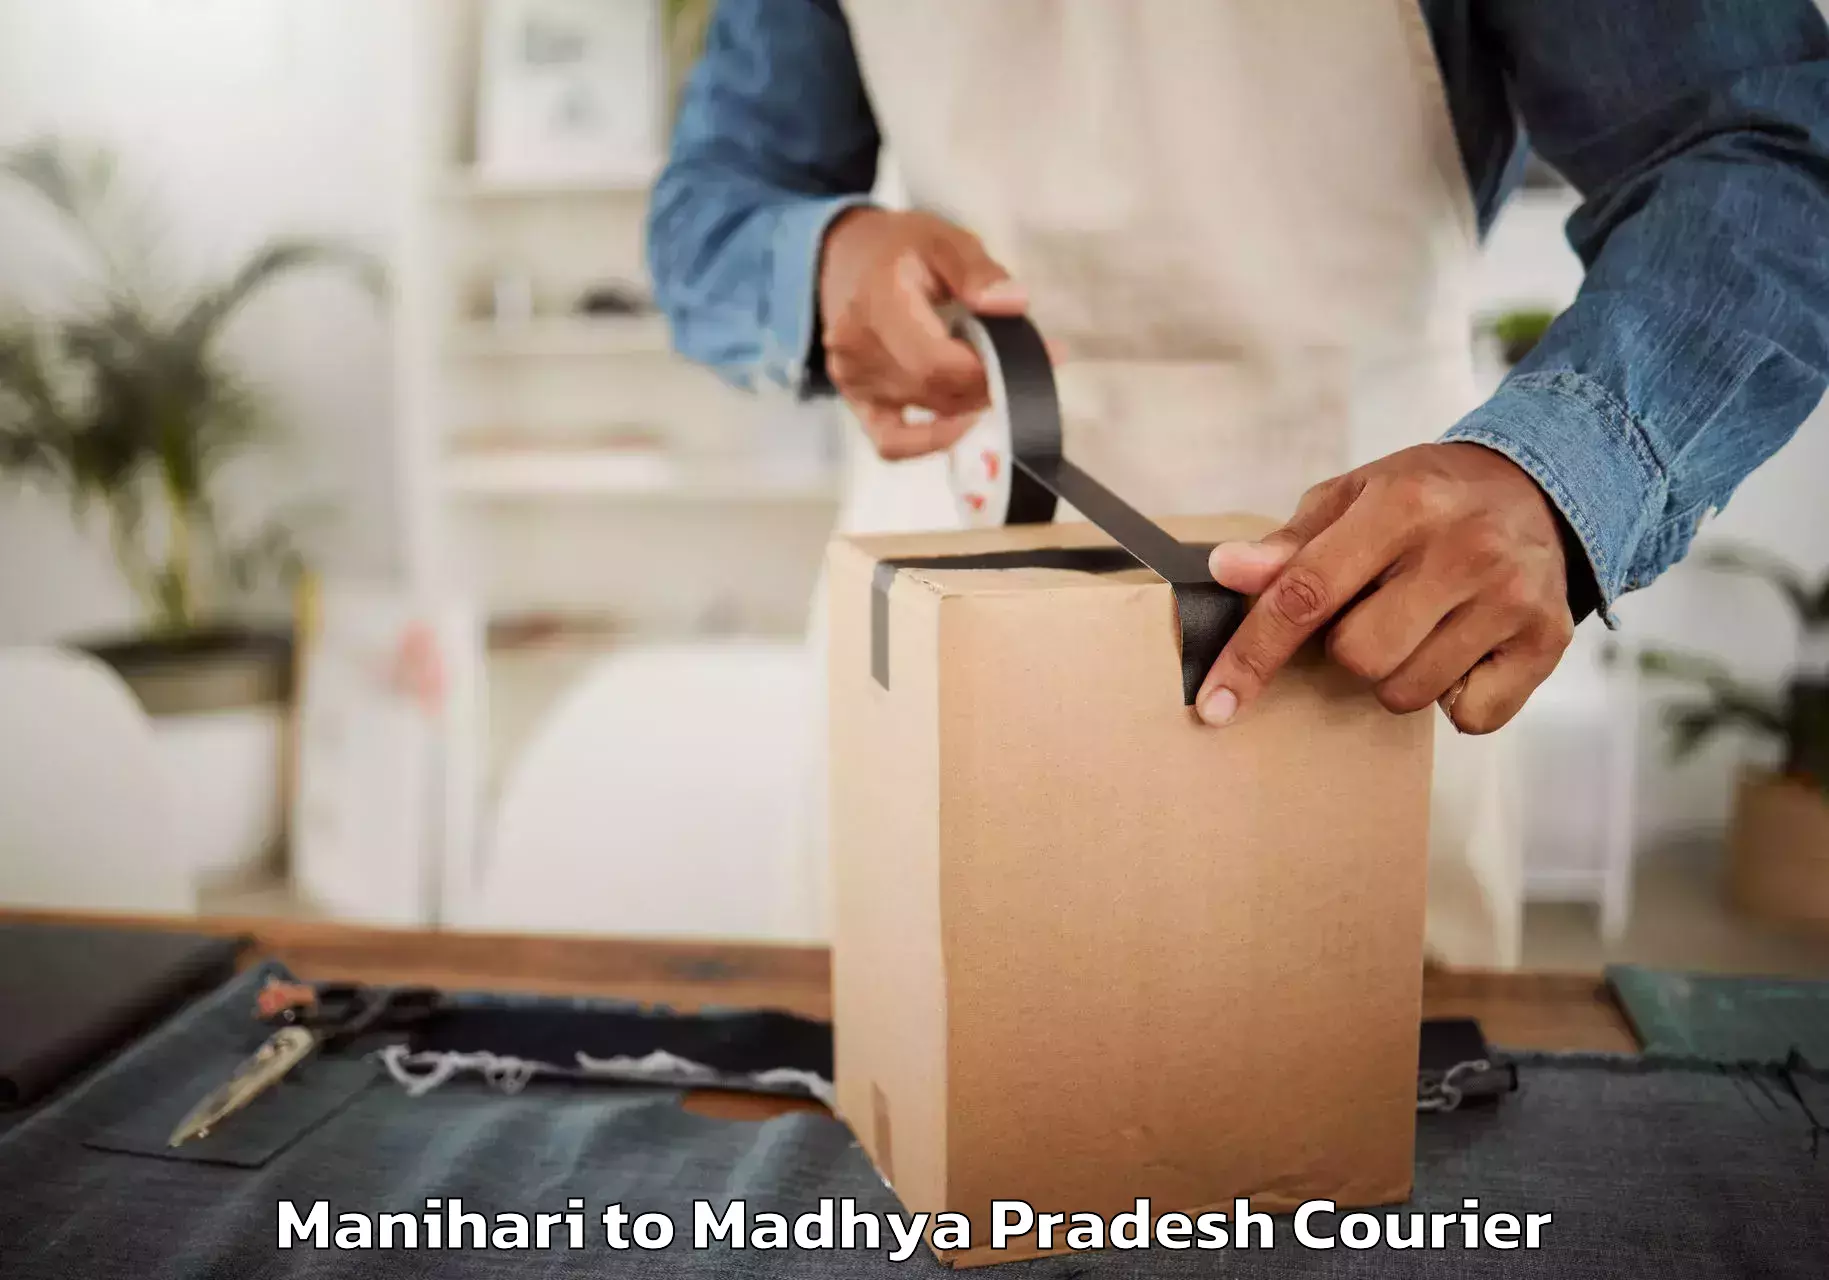 Professional moving company Manihari to Madhya Pradesh